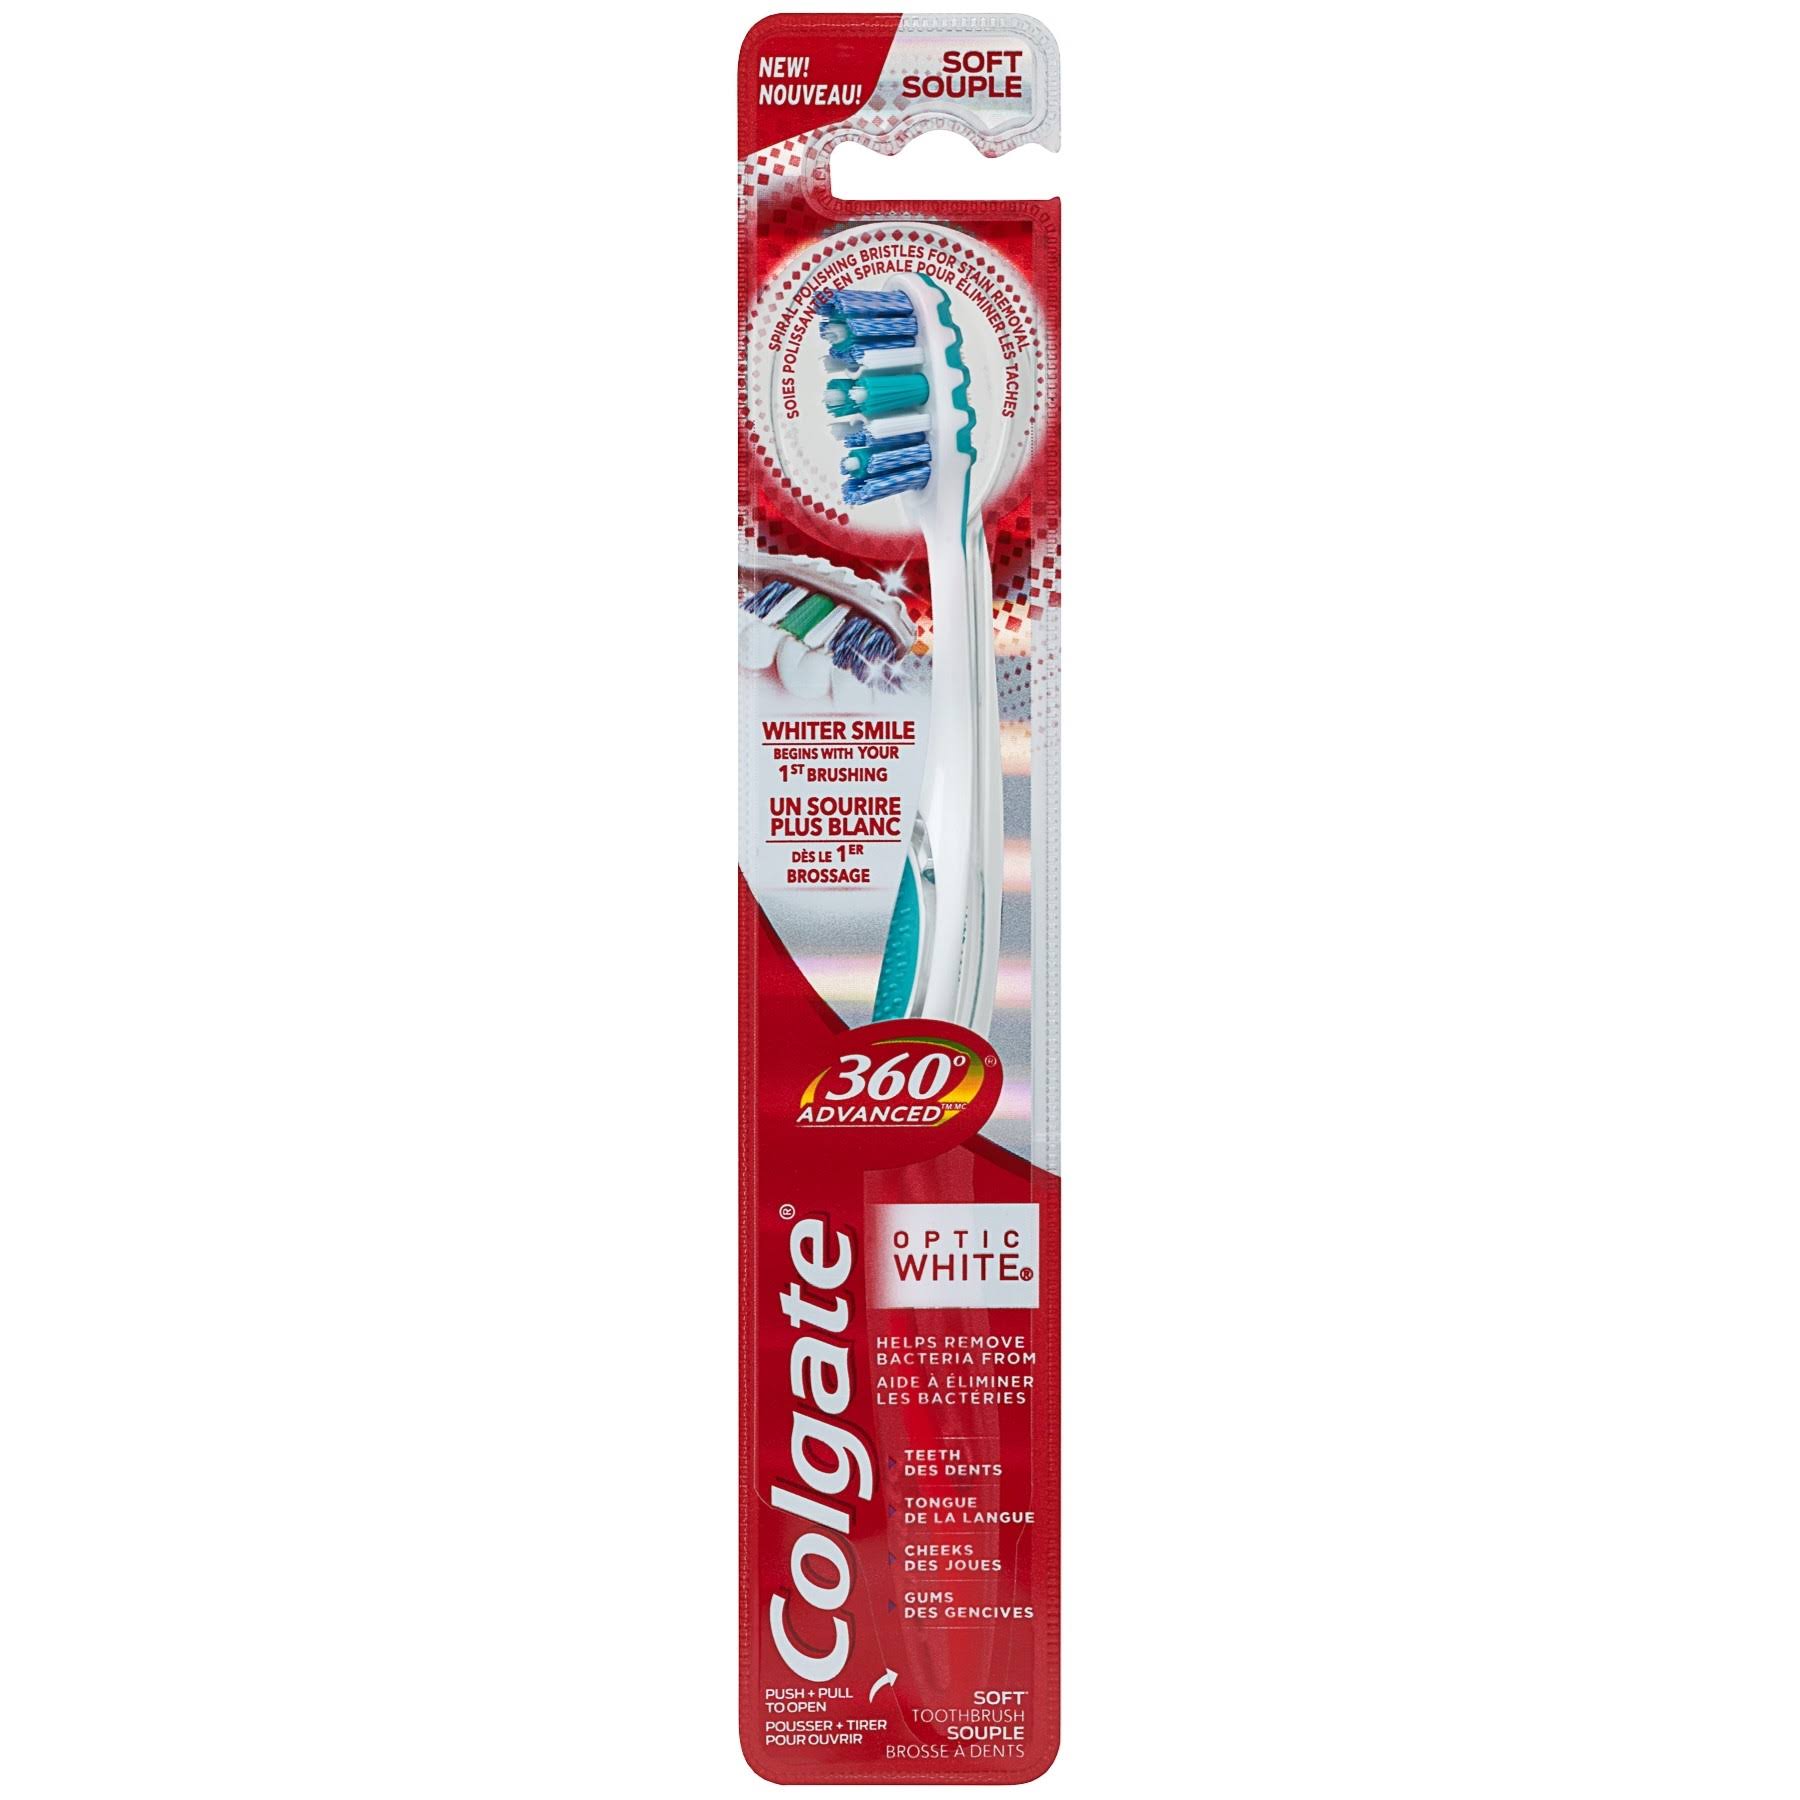 Colgate 360 Advanced Optic White Toothbrush - Soft